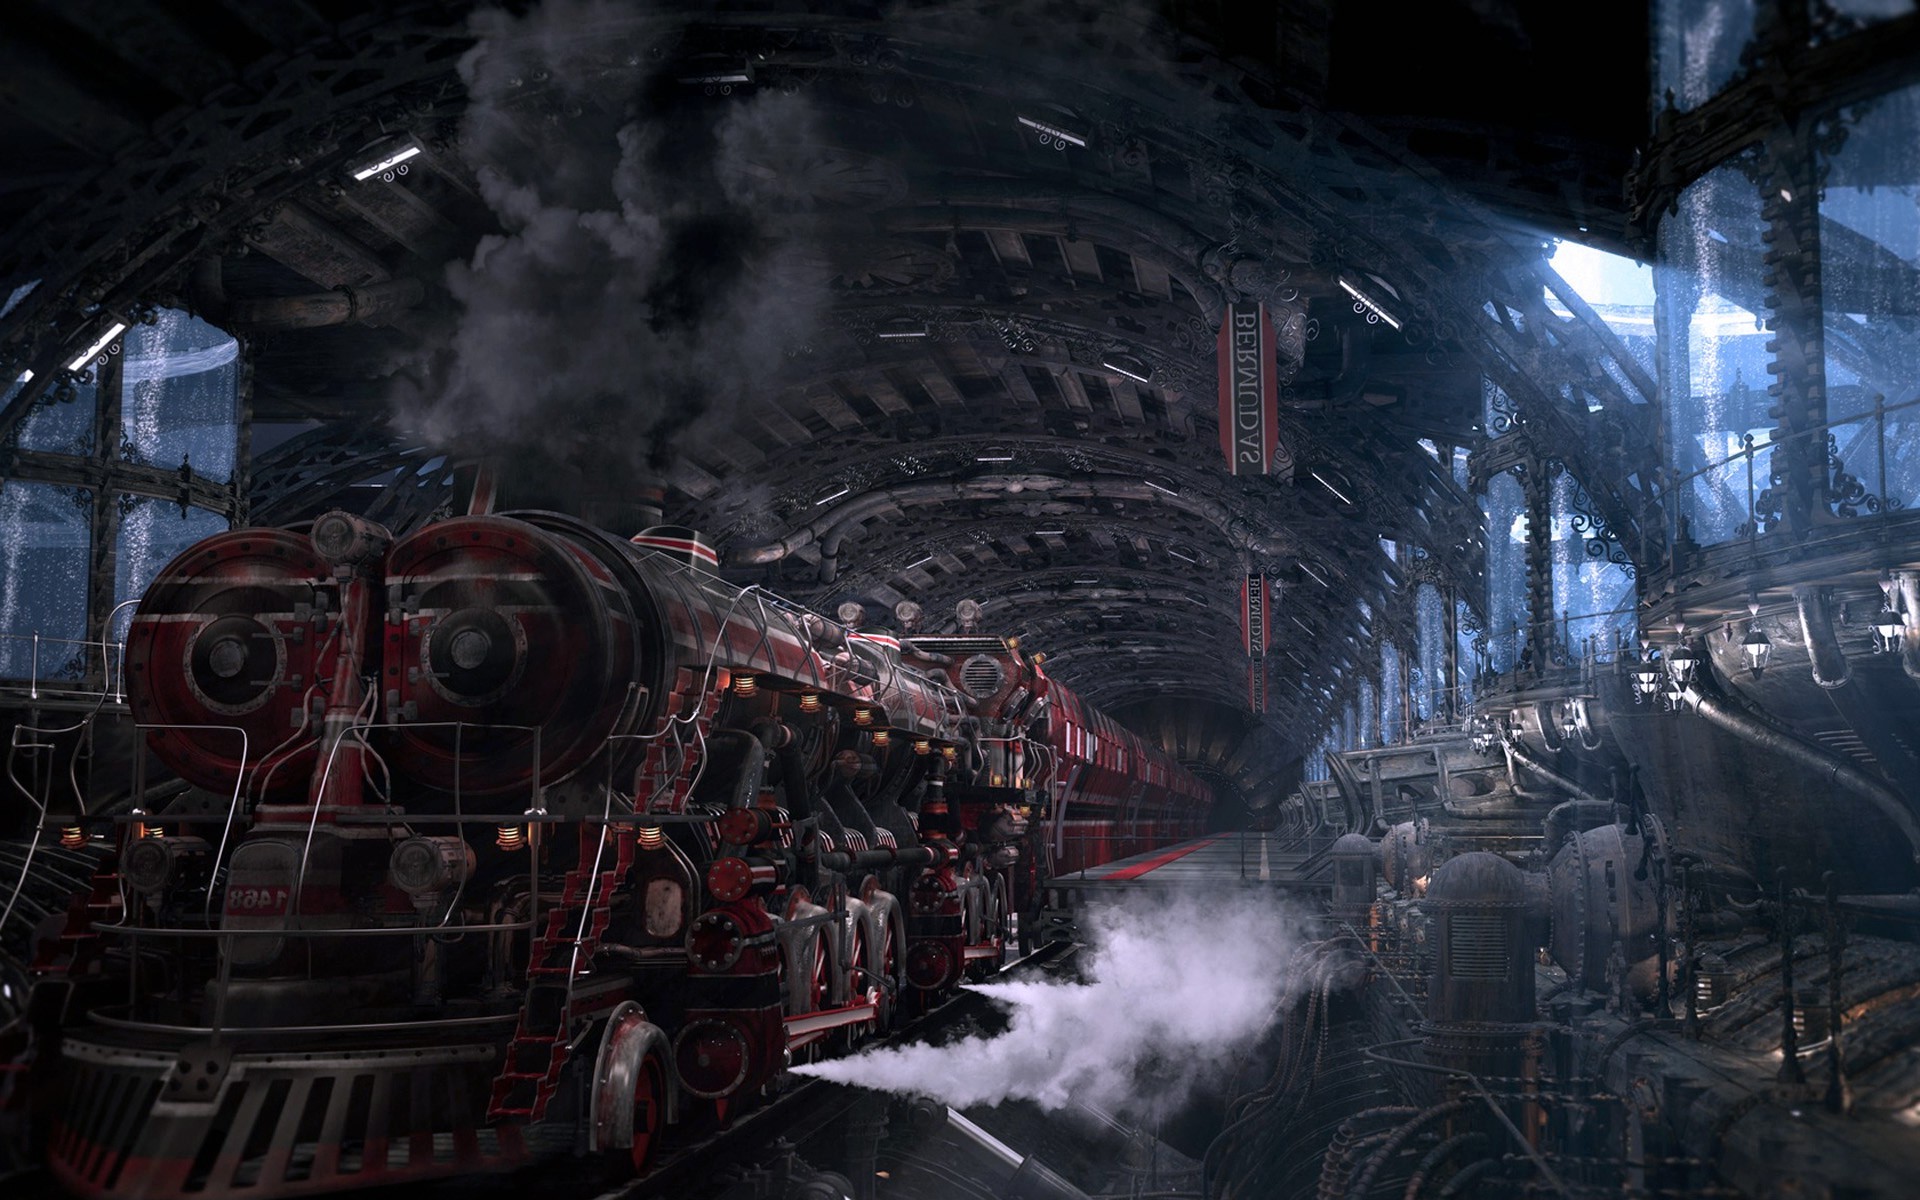 fantasy Art, Digital Art, Train Station, Steam Locomotive, Train